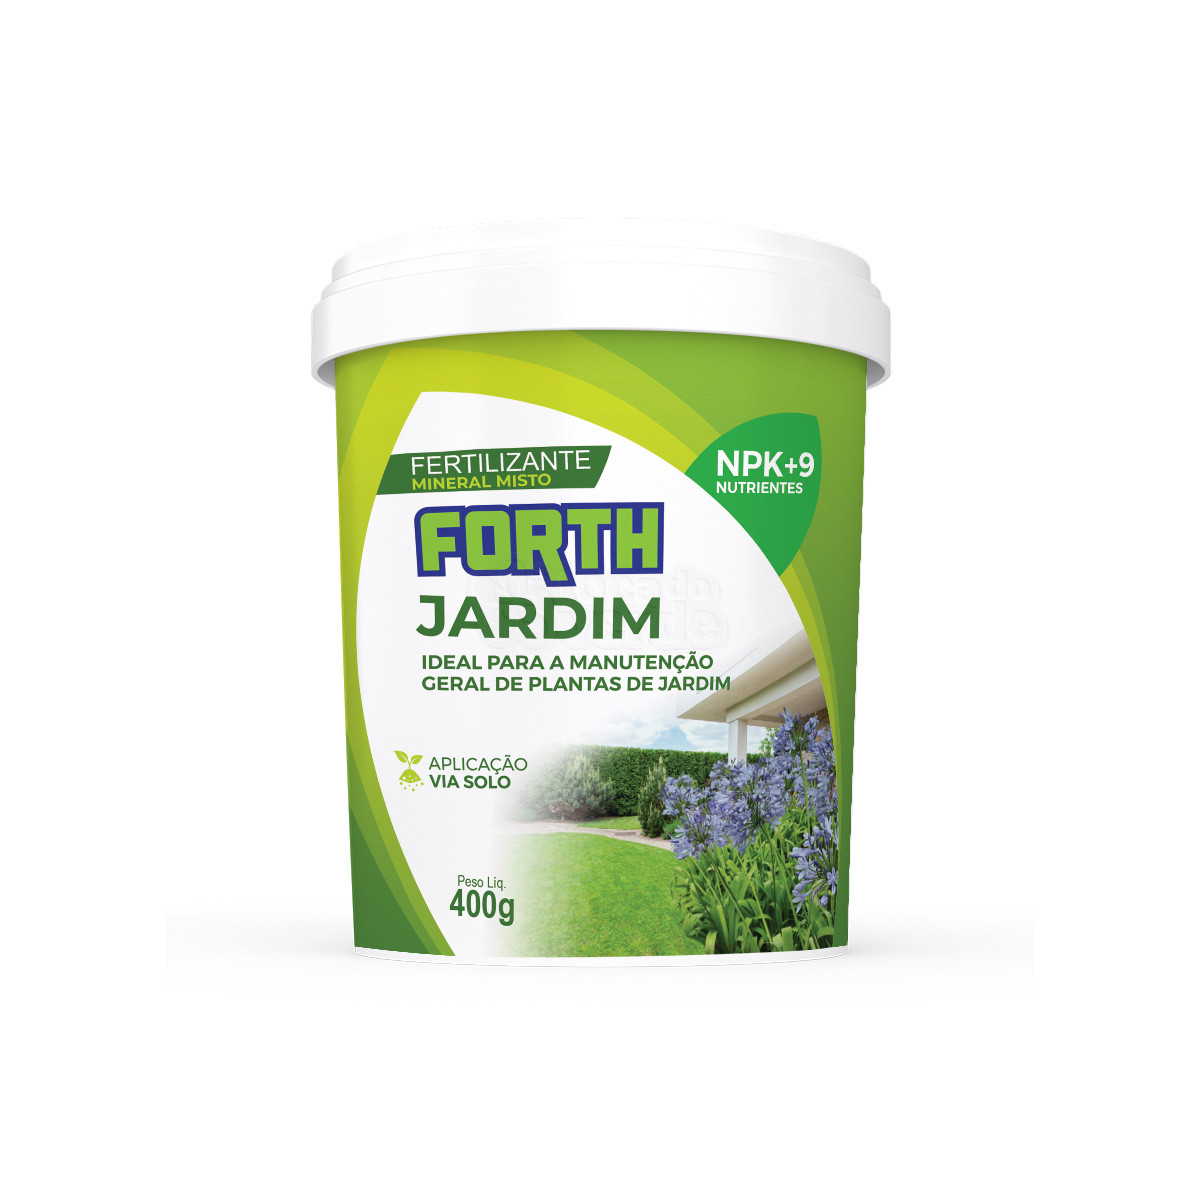 Fertilizante para o Jardim - Forth Jardim - Fertilizante NPK 13-05-13 + 9 Micronutrientes